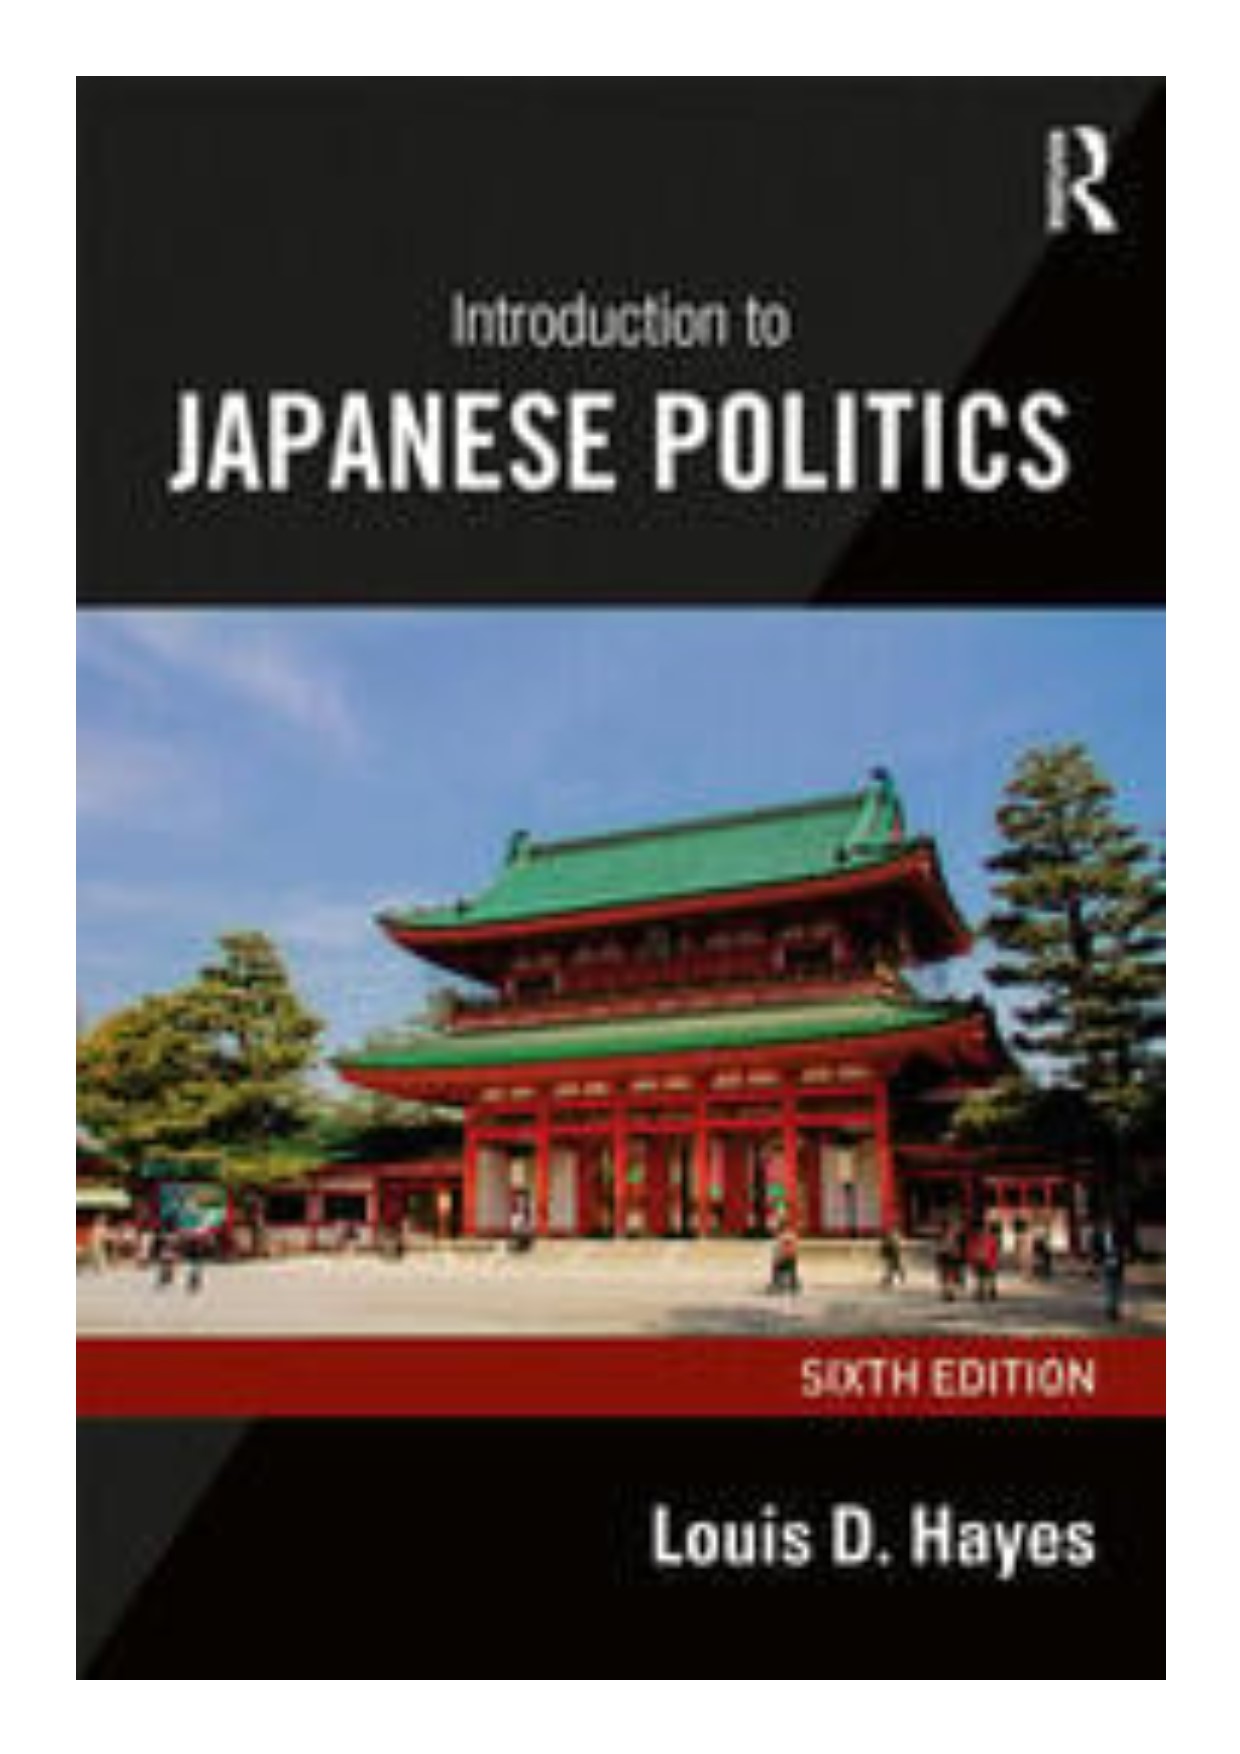 Introduction to Japanese politics